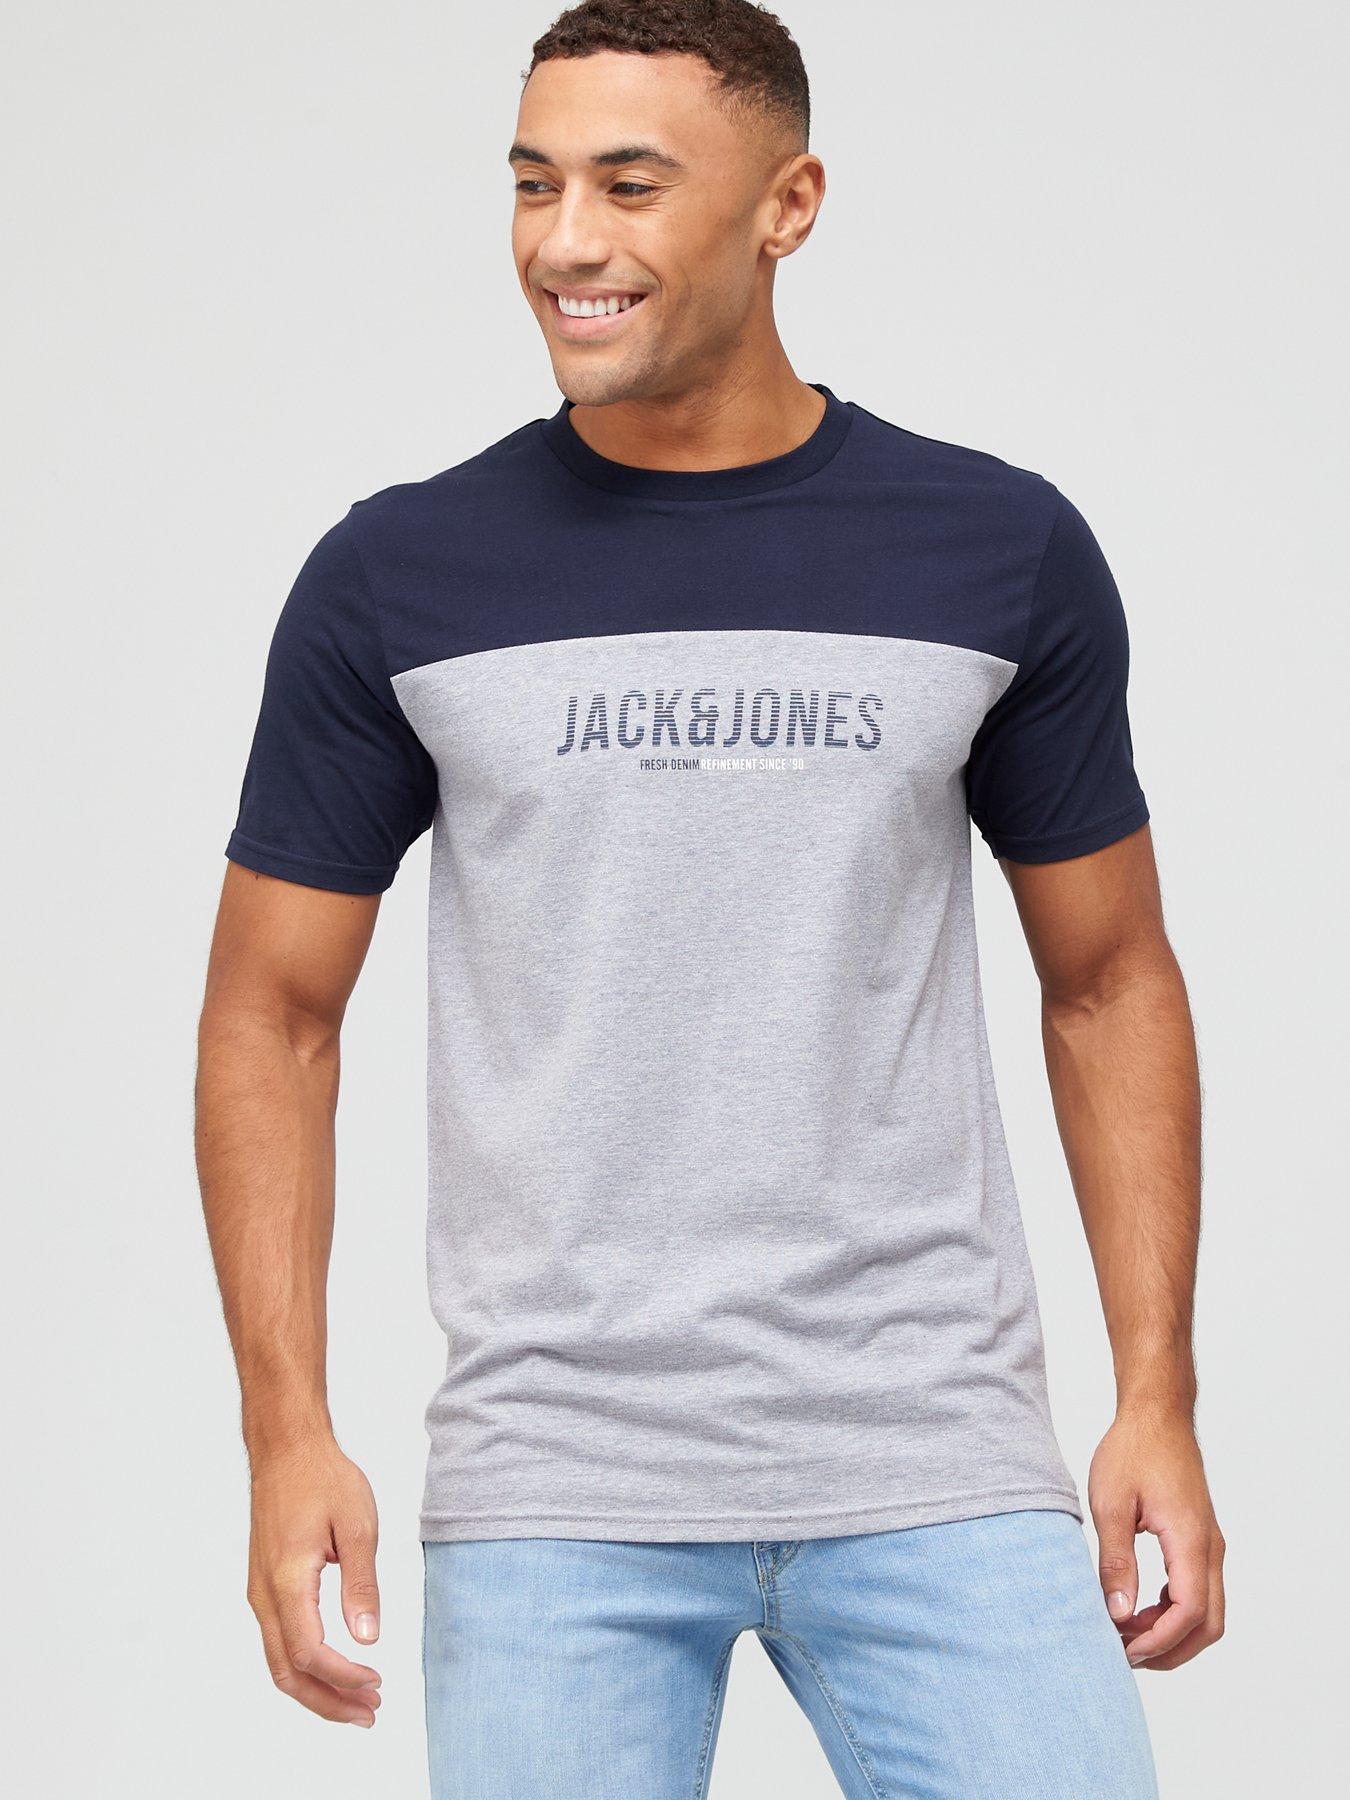 discount 54% Navy Blue S MEN FASHION Shirts & T-shirts Casual Jack & Jones T-shirt 